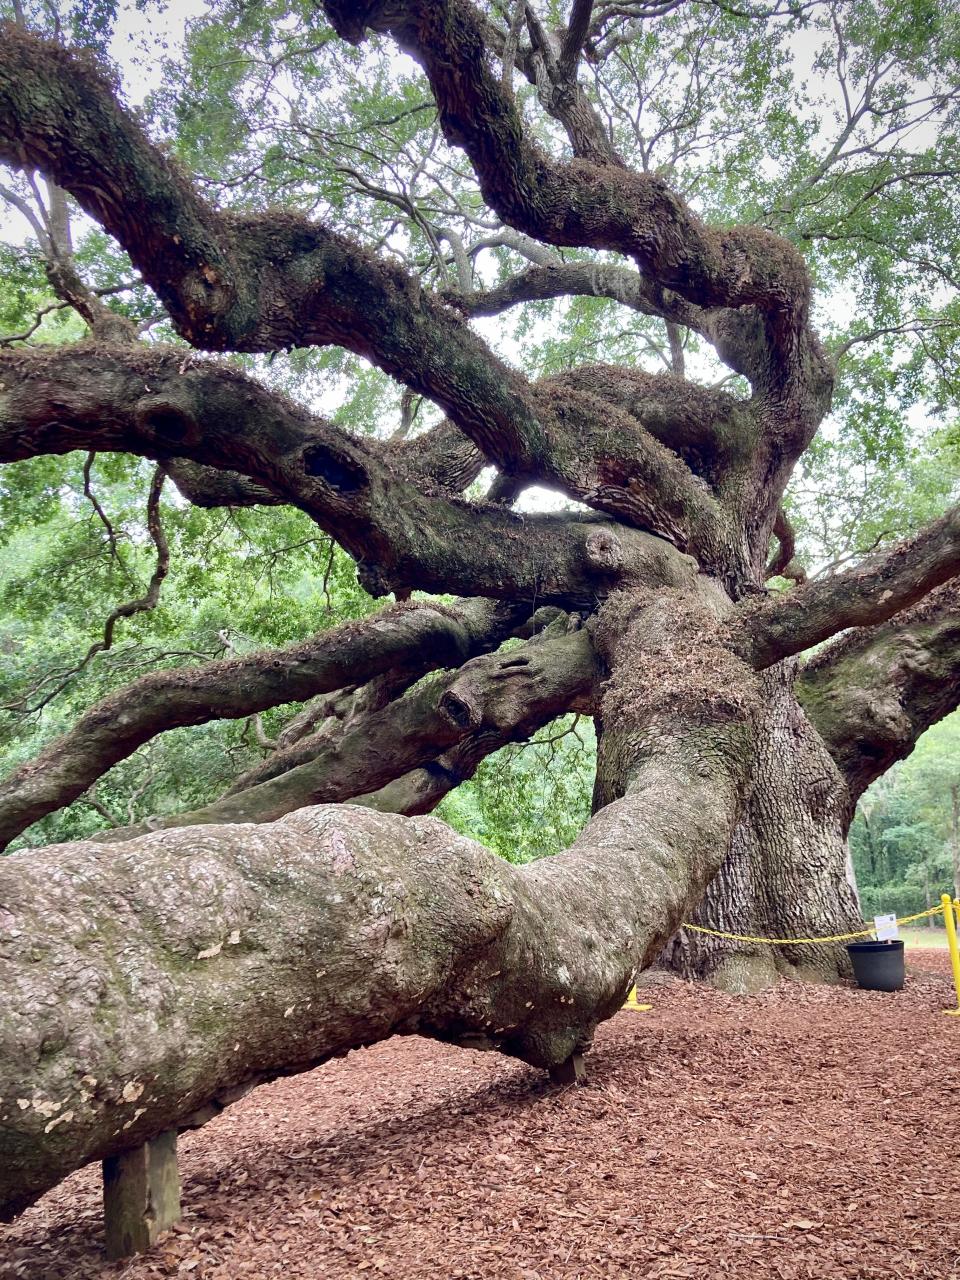 The massive Angel Oak twists in its more than 400-year-old splendor.